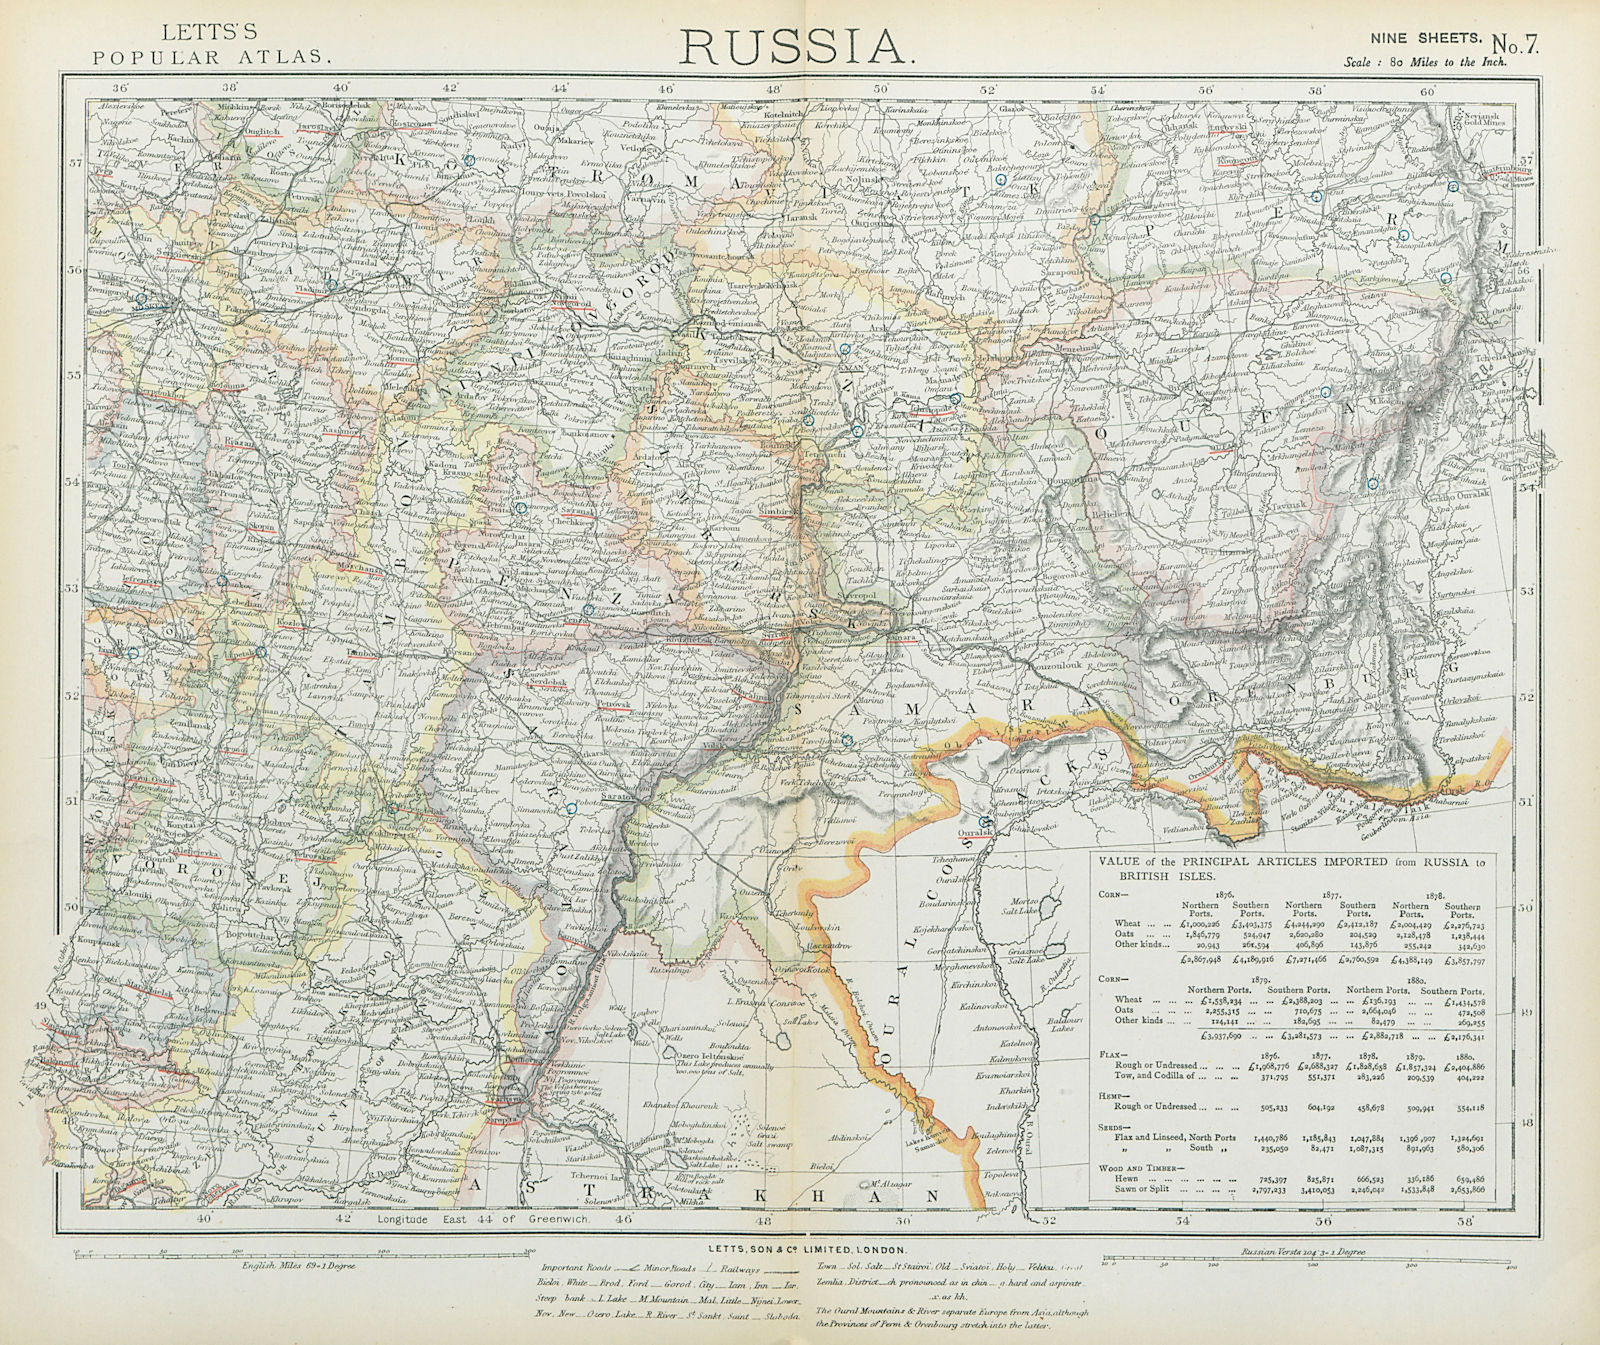 Associate Product RUSSIA Astrakhan Kostroma Viatra Perm Penza Saratov Kazan Tambor LETTS 1883 map